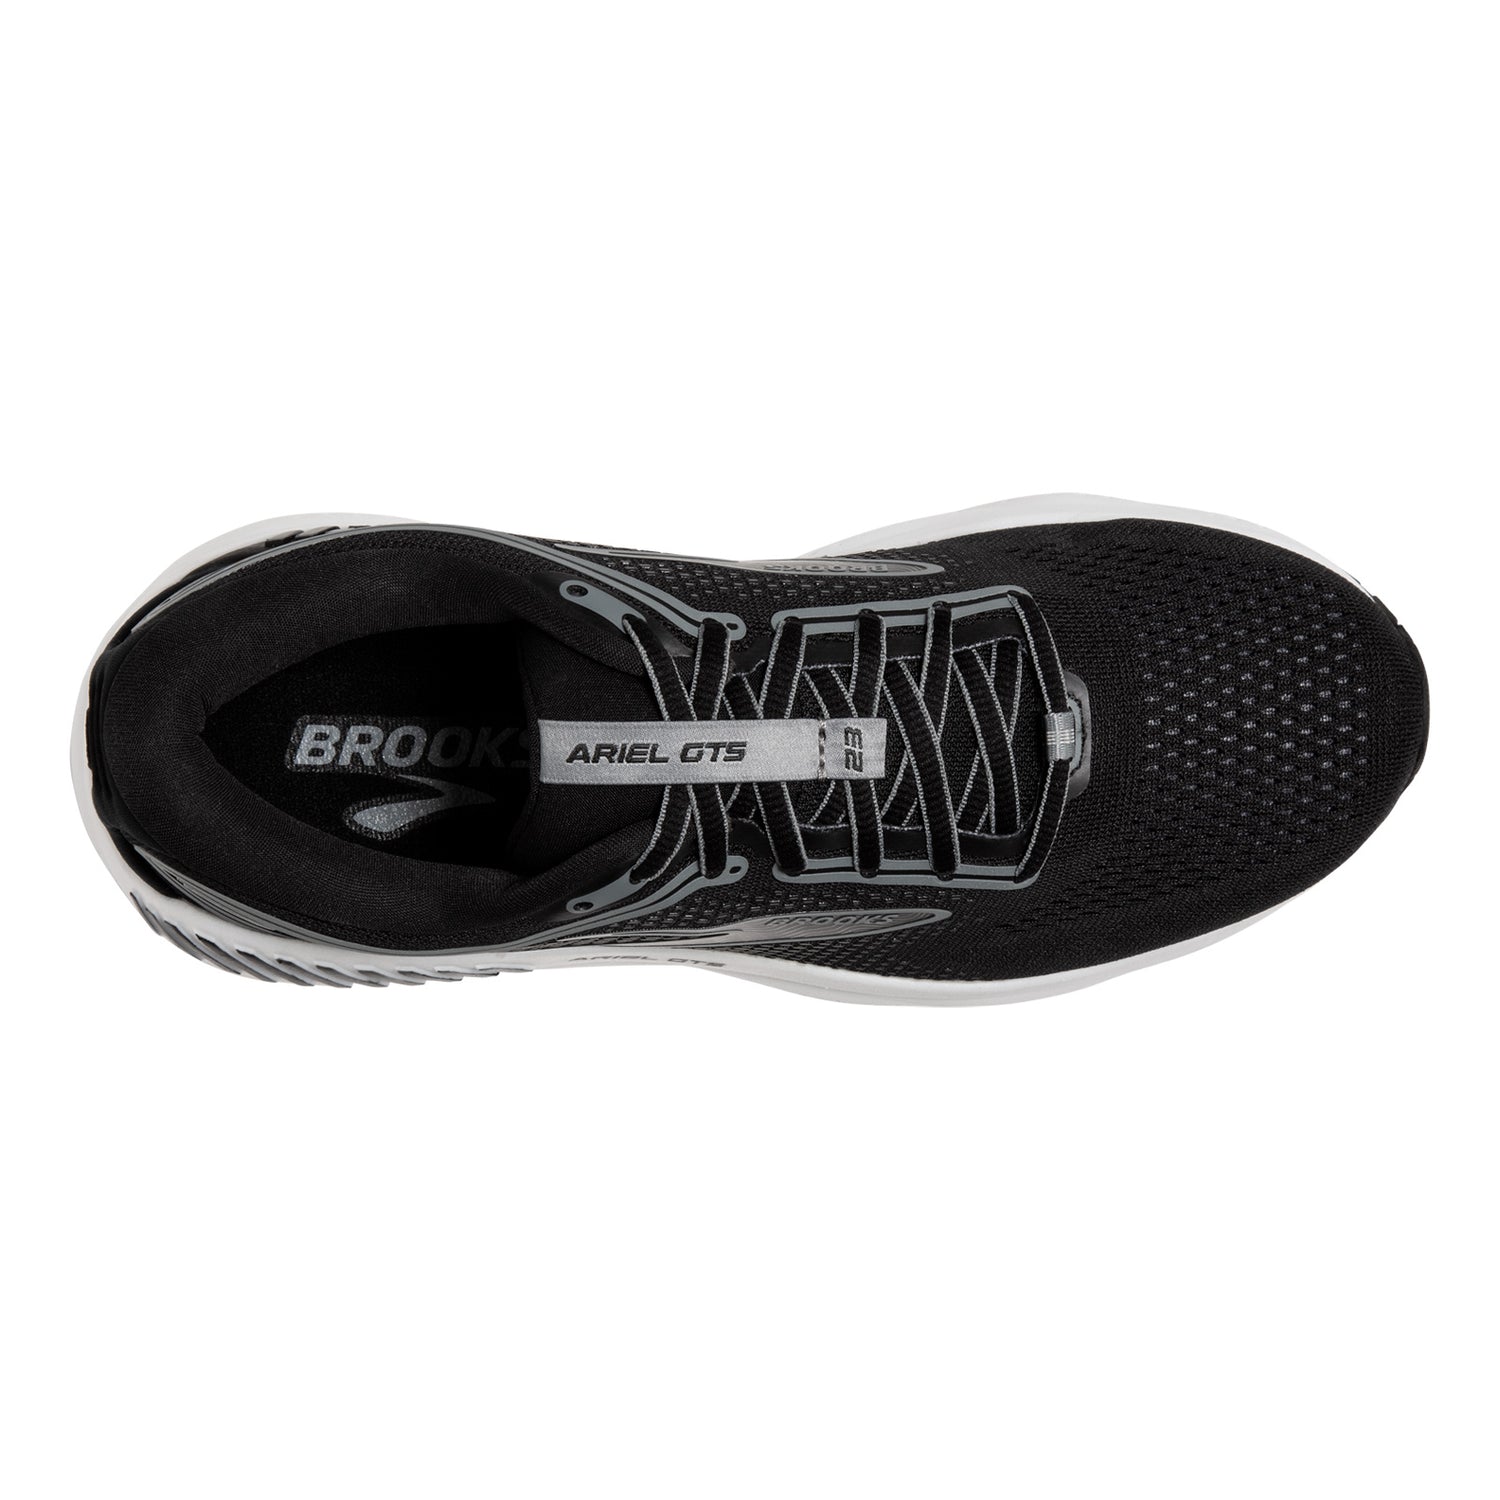 Peltz Shoes  Women's Brooks Ariel GTS 23 Running Shoe - Extra Wide Width Black/Grey/White 120390 2E 090